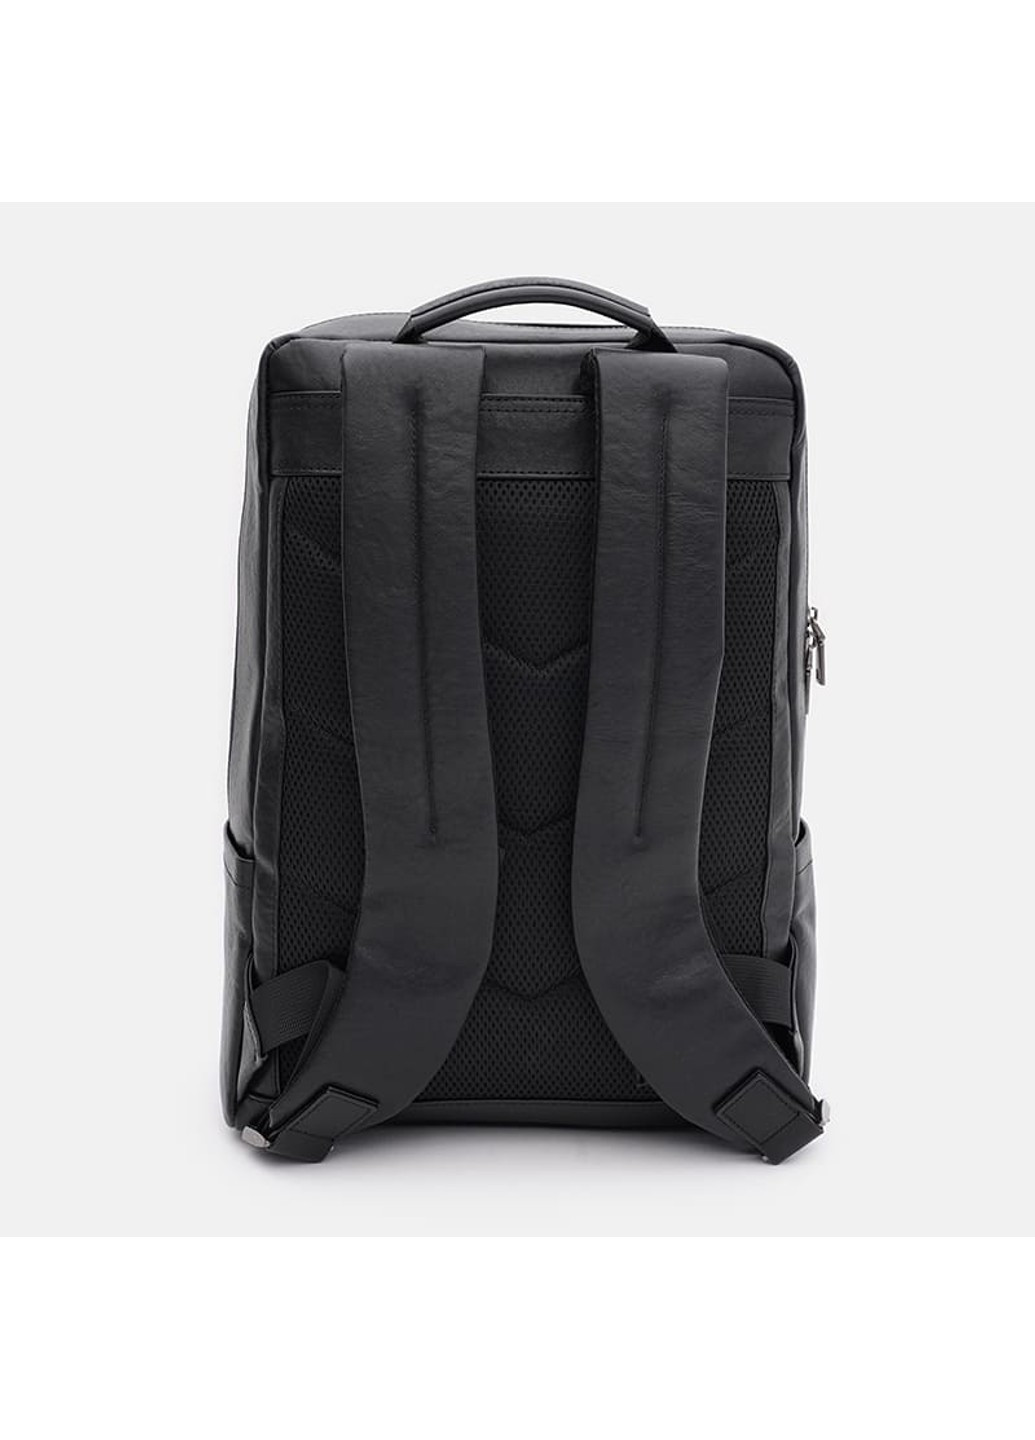 Мужской кожаный рюкзак K16616bl-black Ricco Grande (277925975)